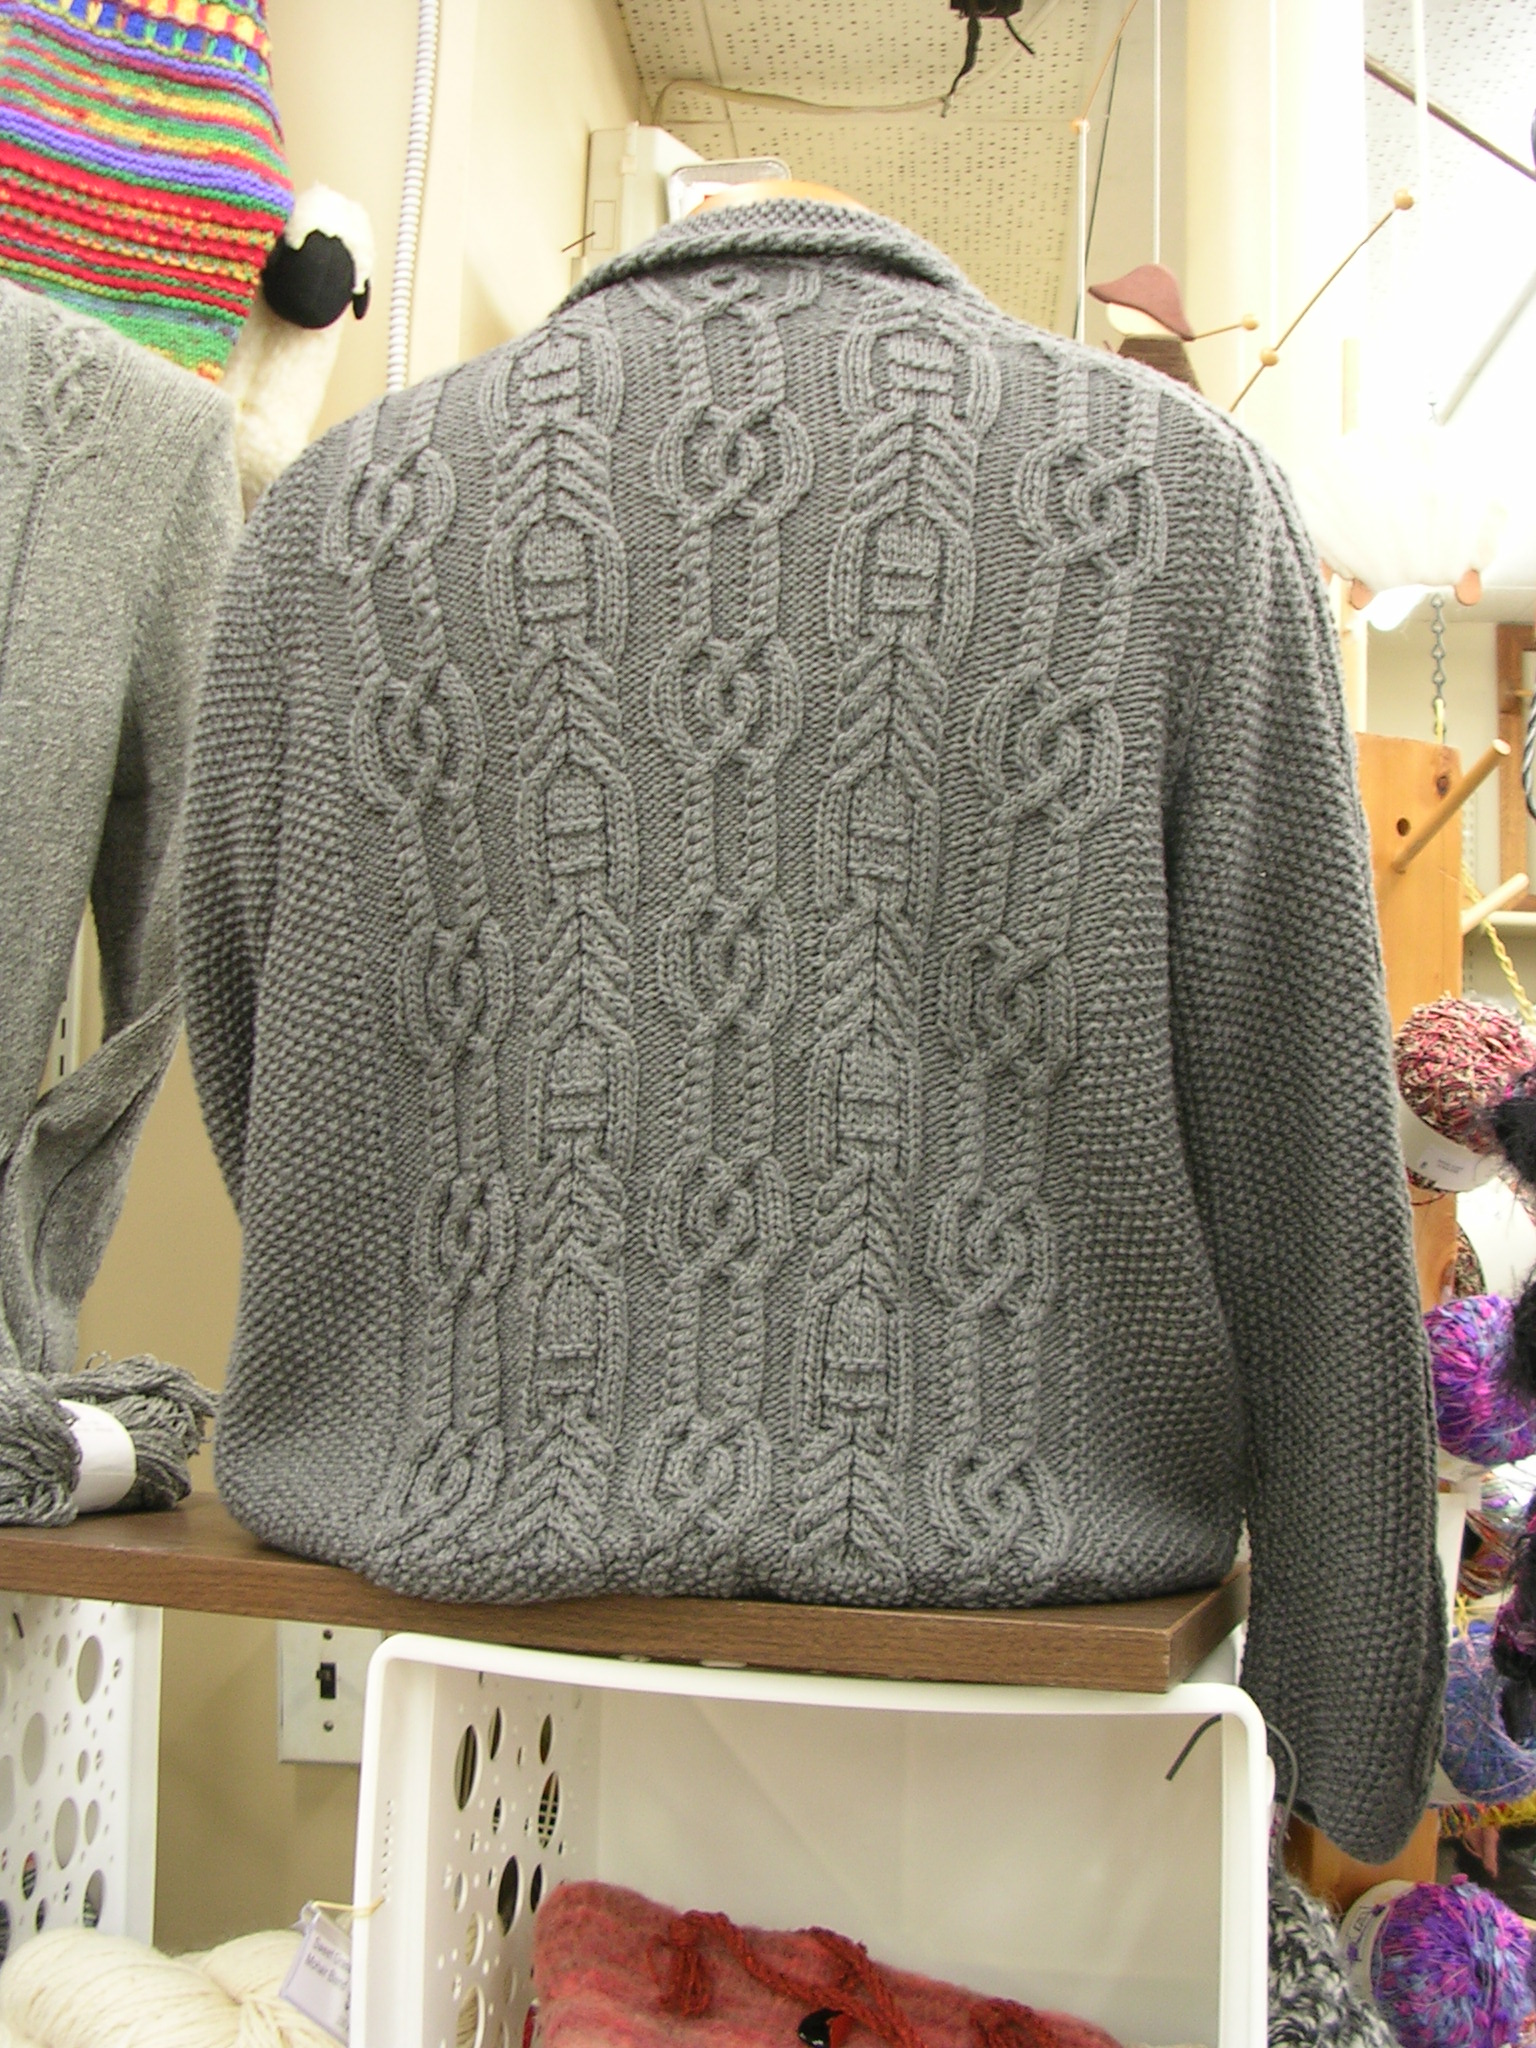 Back view of winning sweater